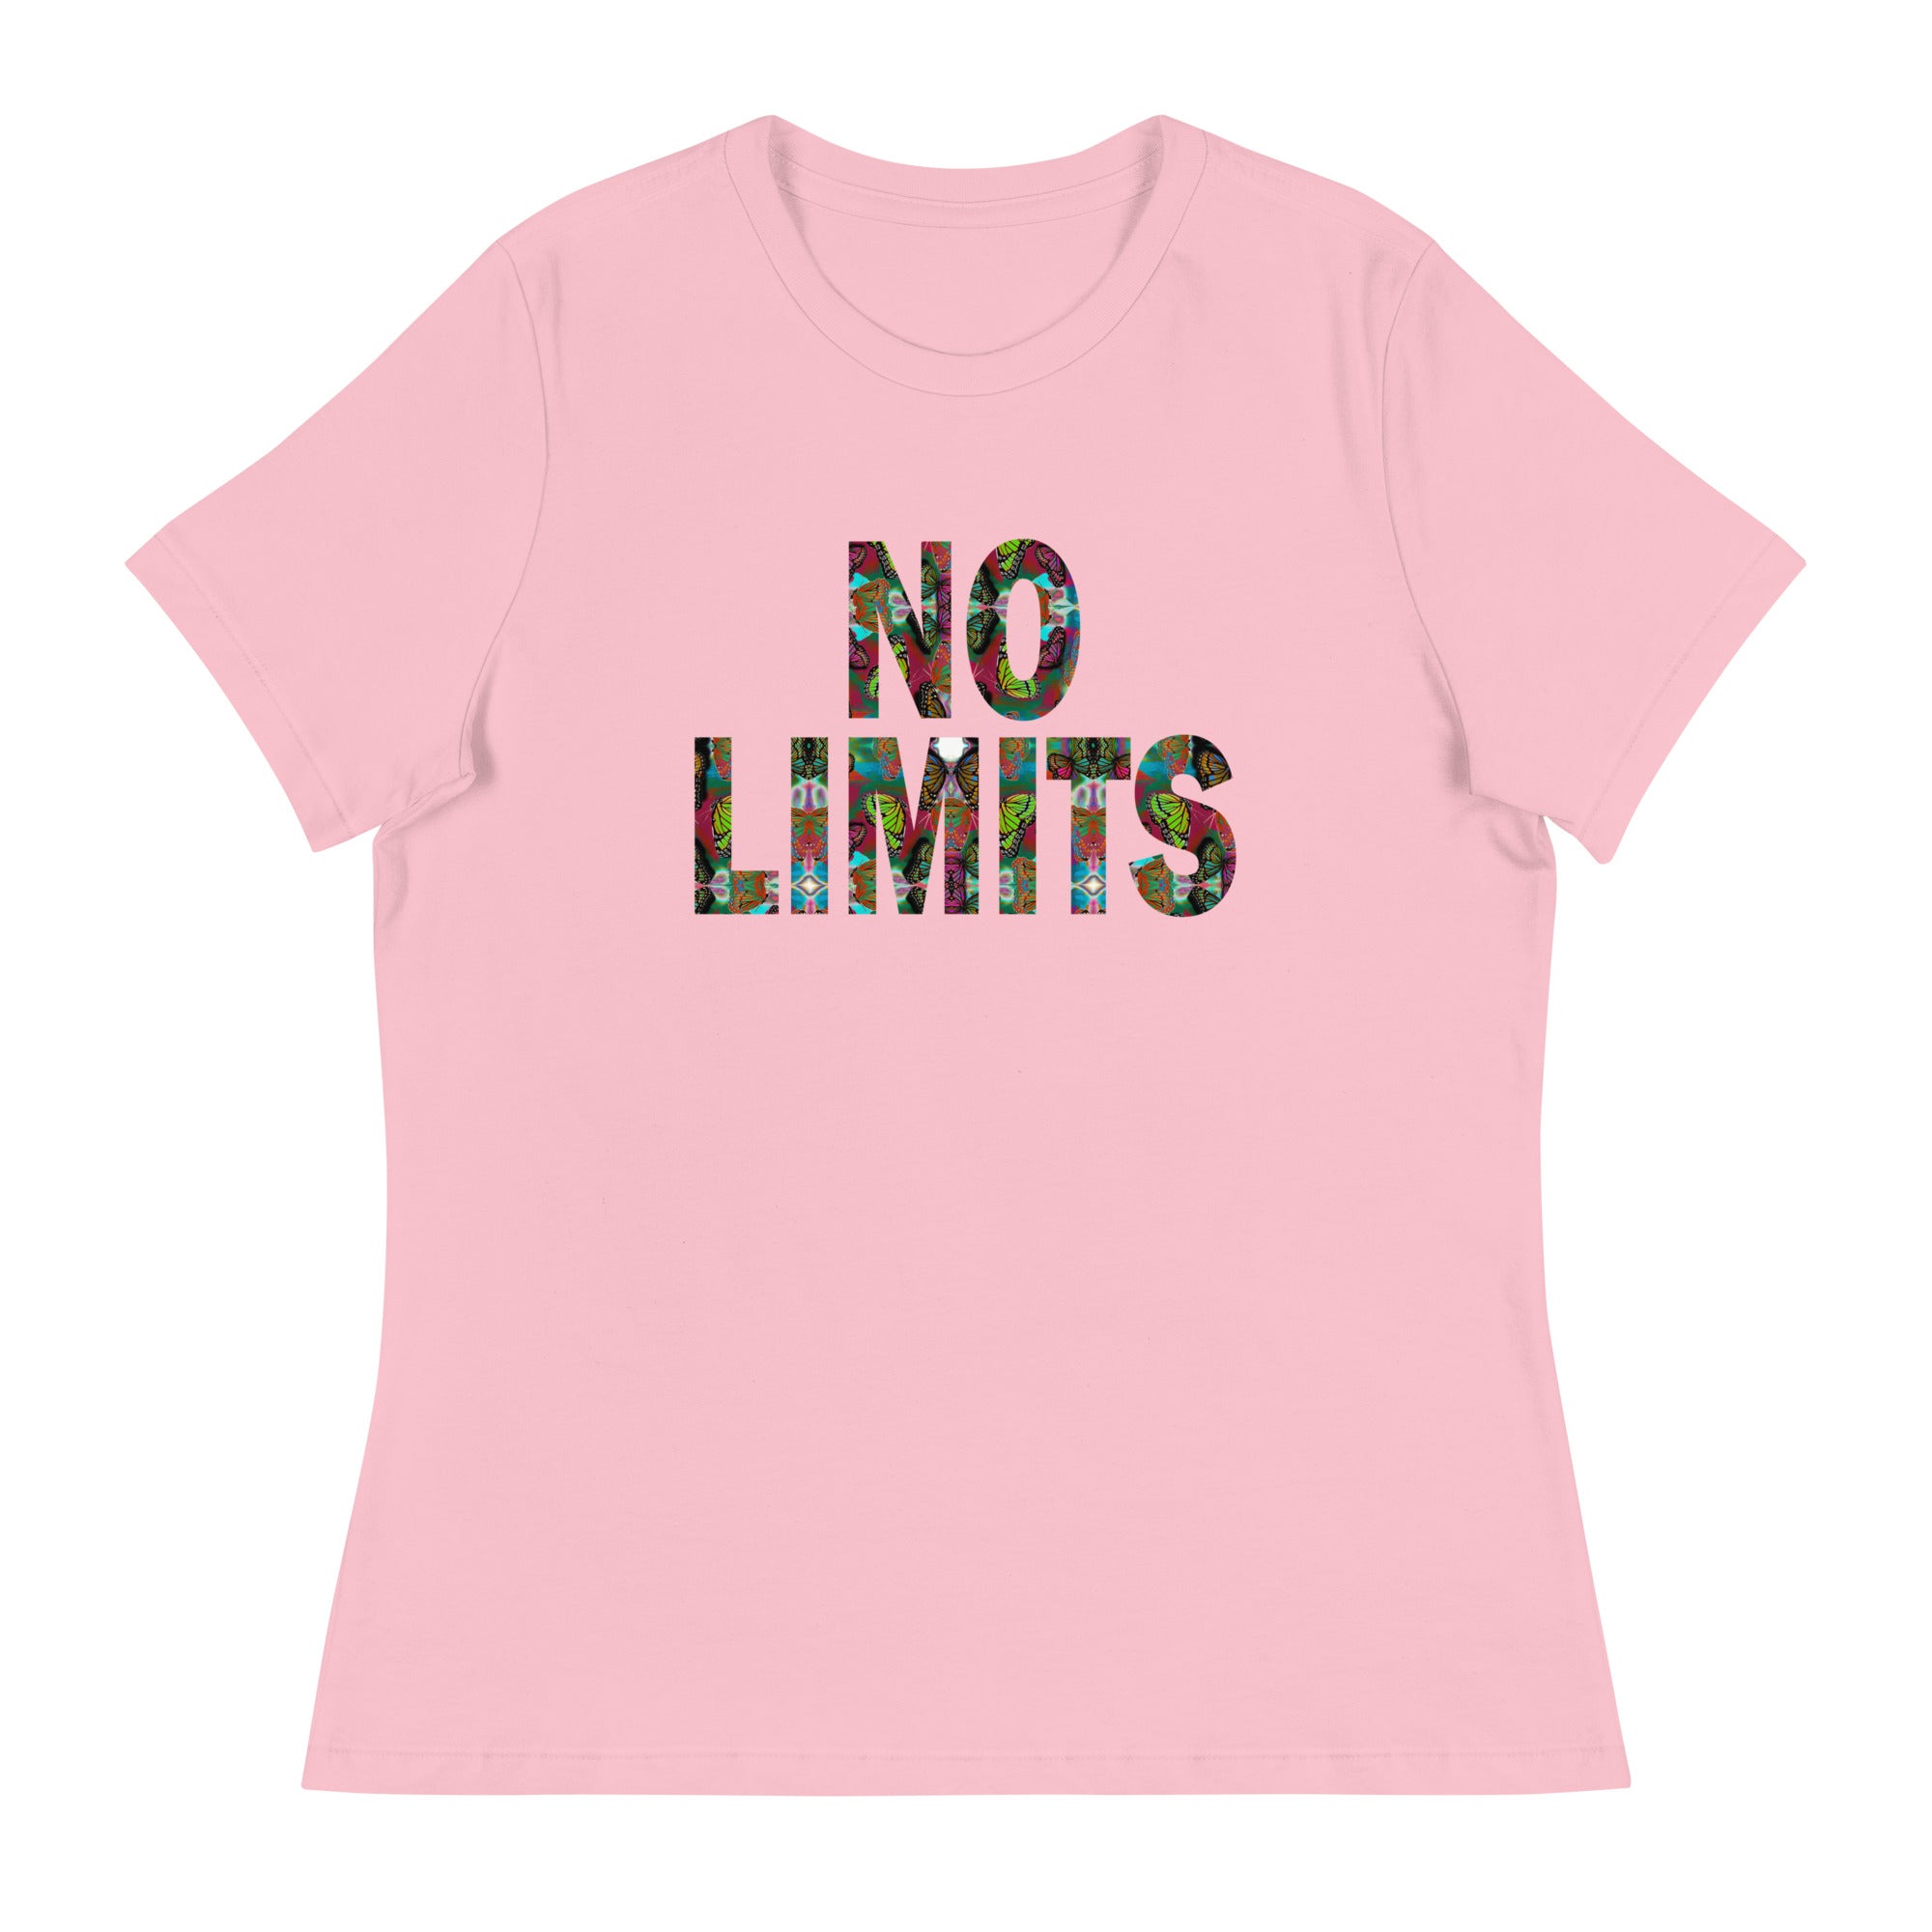 NO LIMITS ~ Women's Graphic T-Shirt, Butterfly Word Art Short Sleeve Top